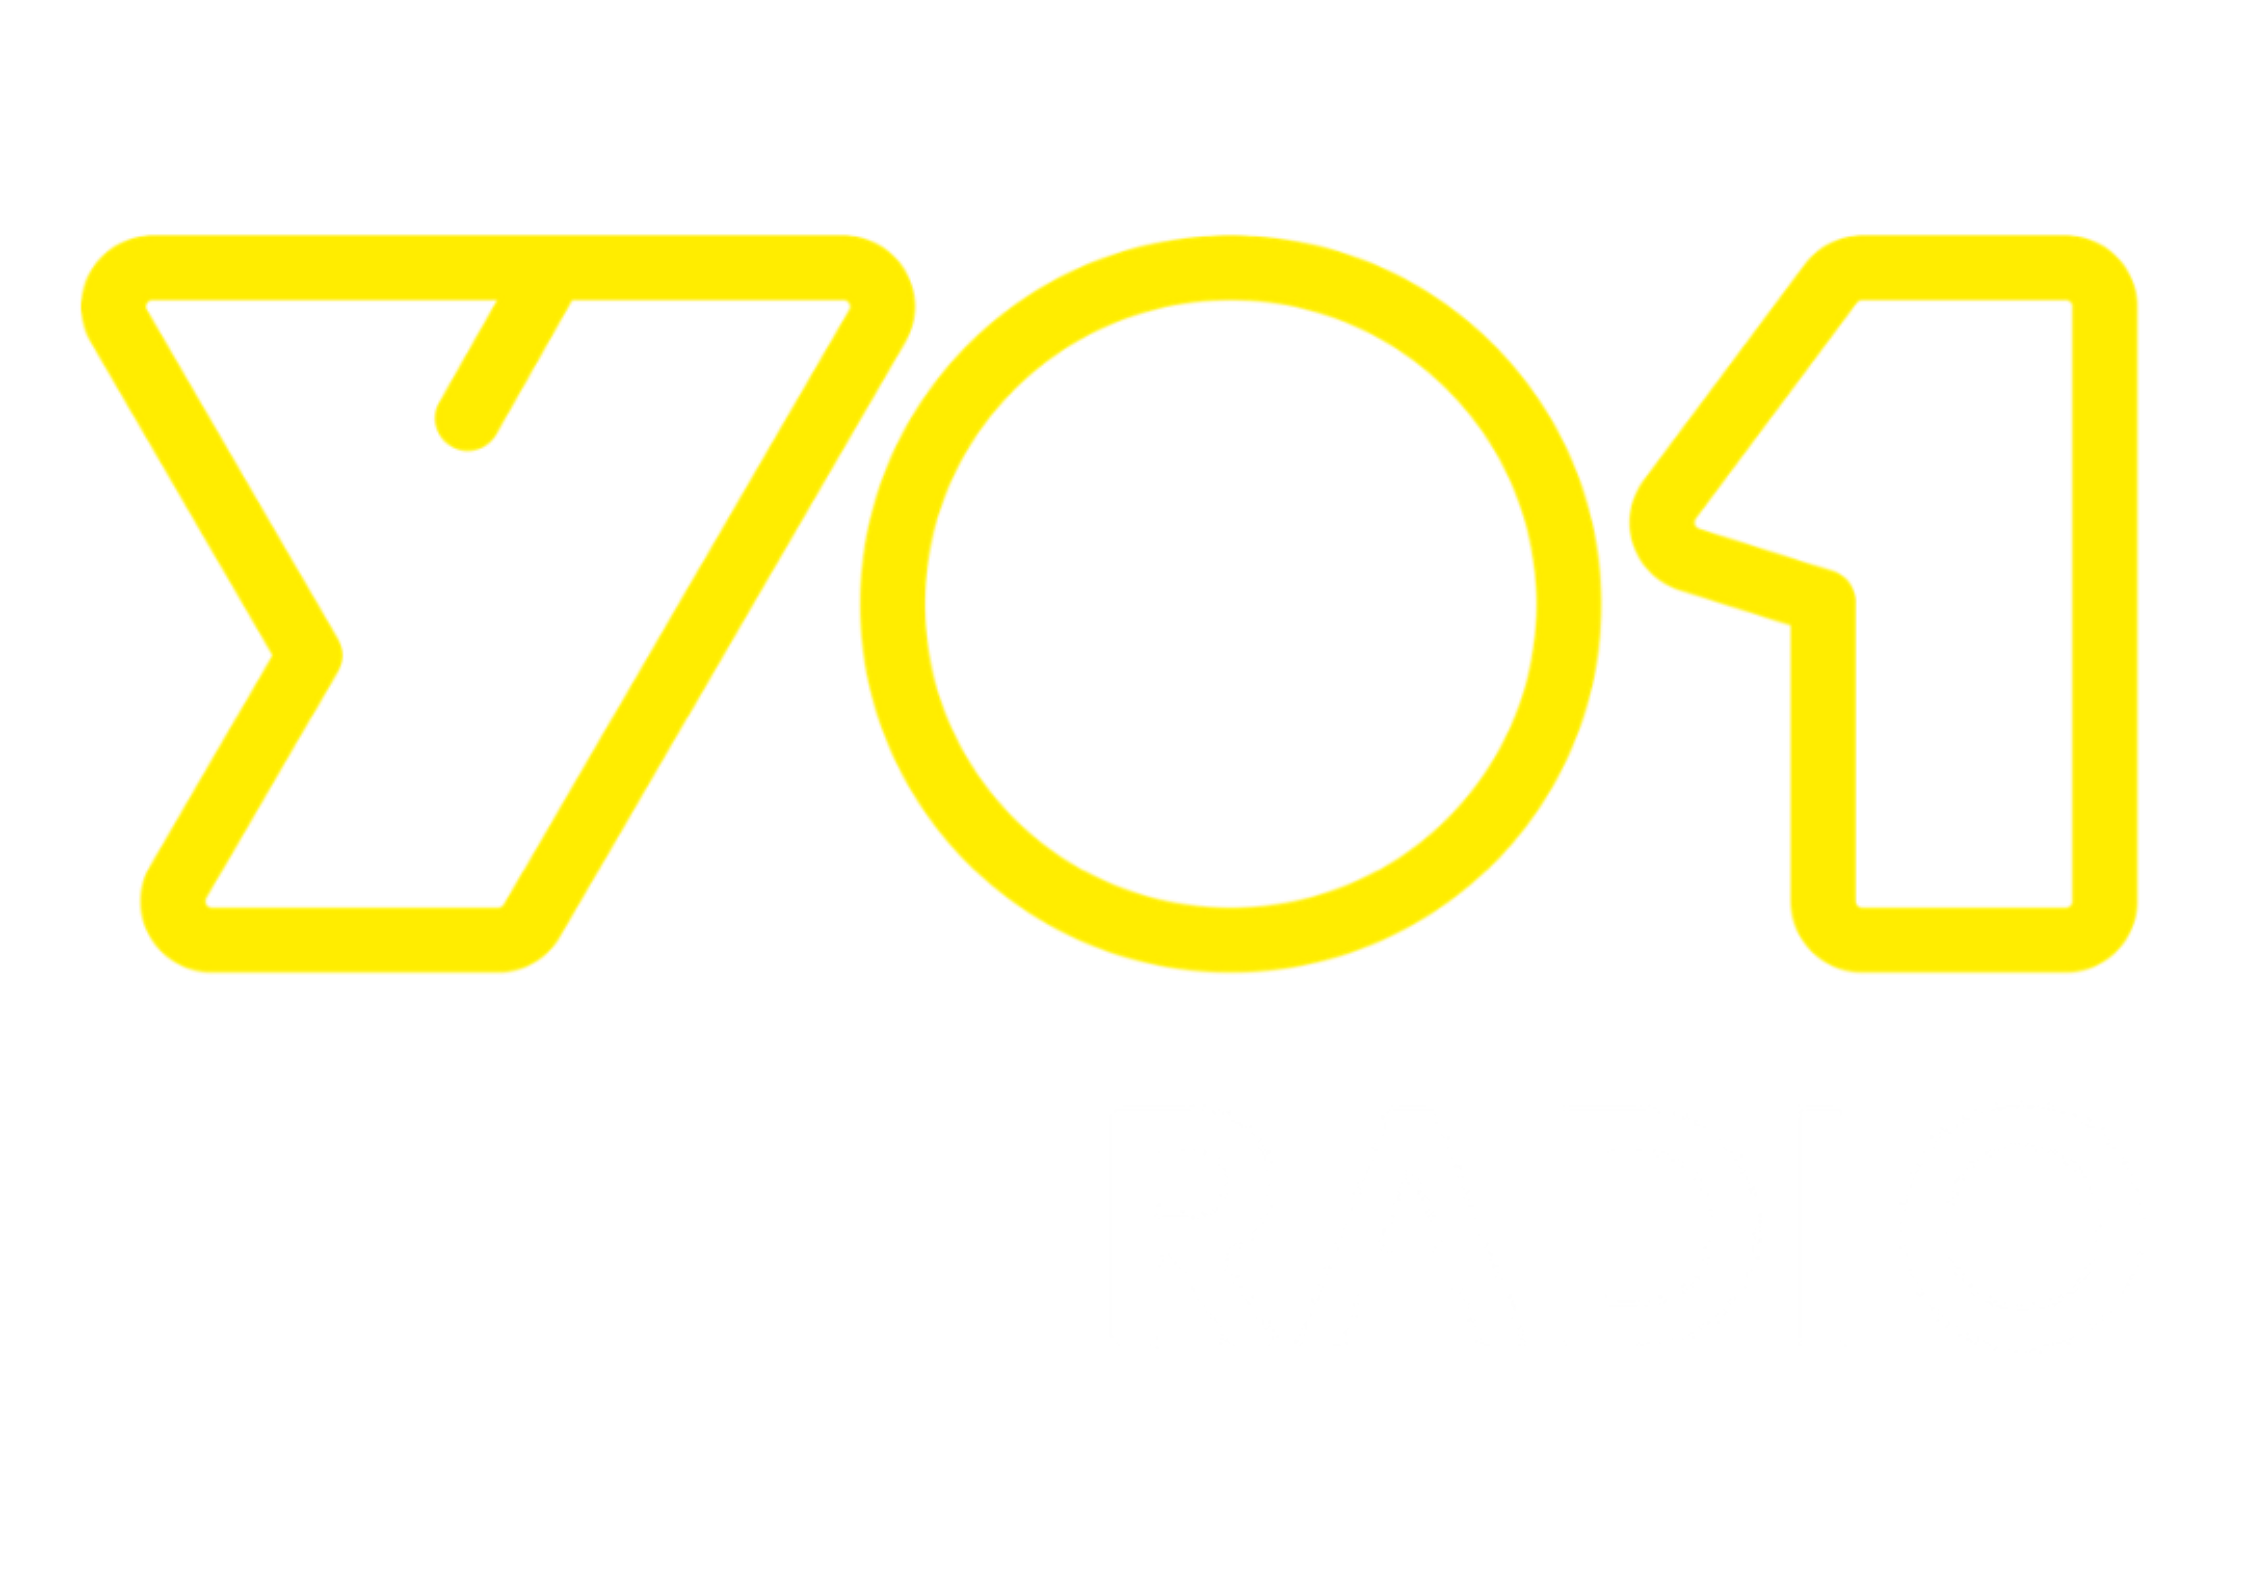 YO1 Radio